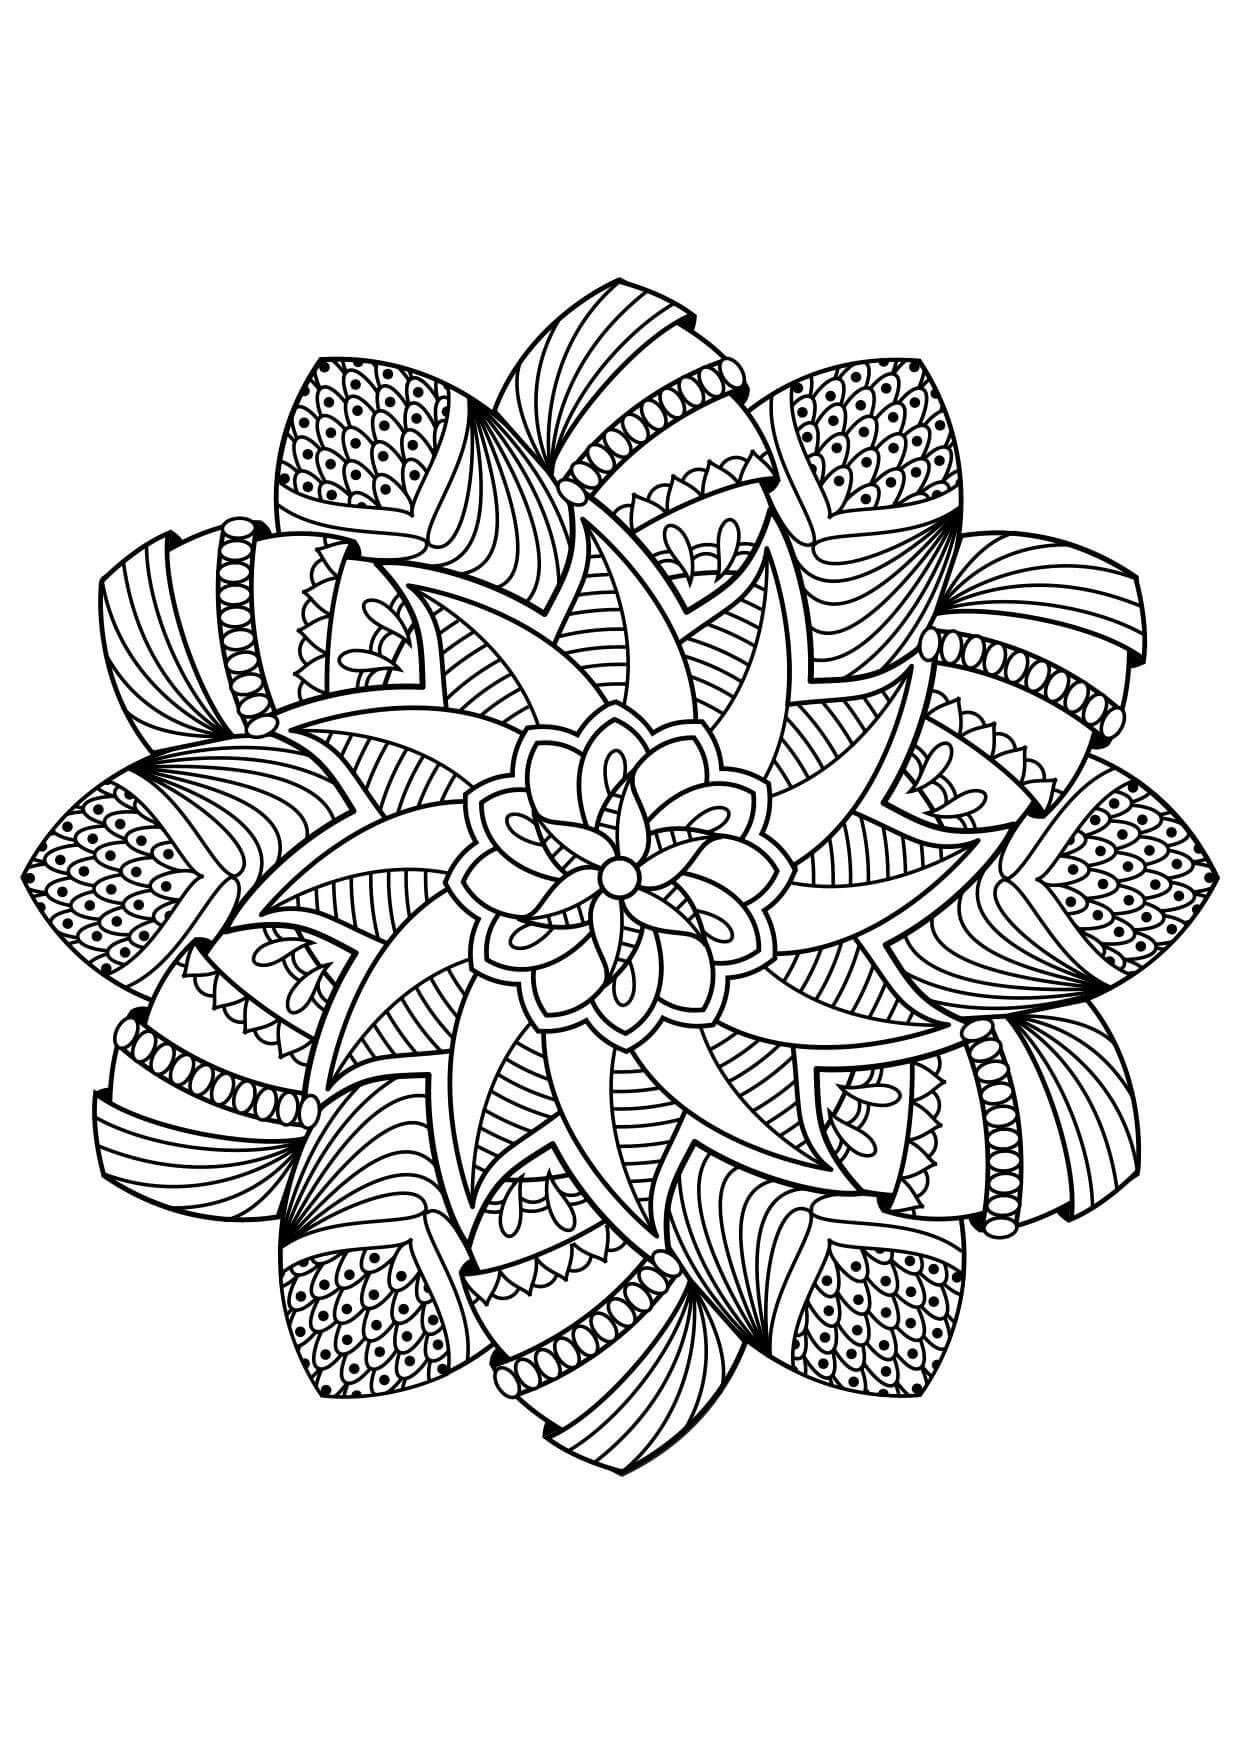 Mandala Rose Coloring Page - Sheet 4 Mandalas